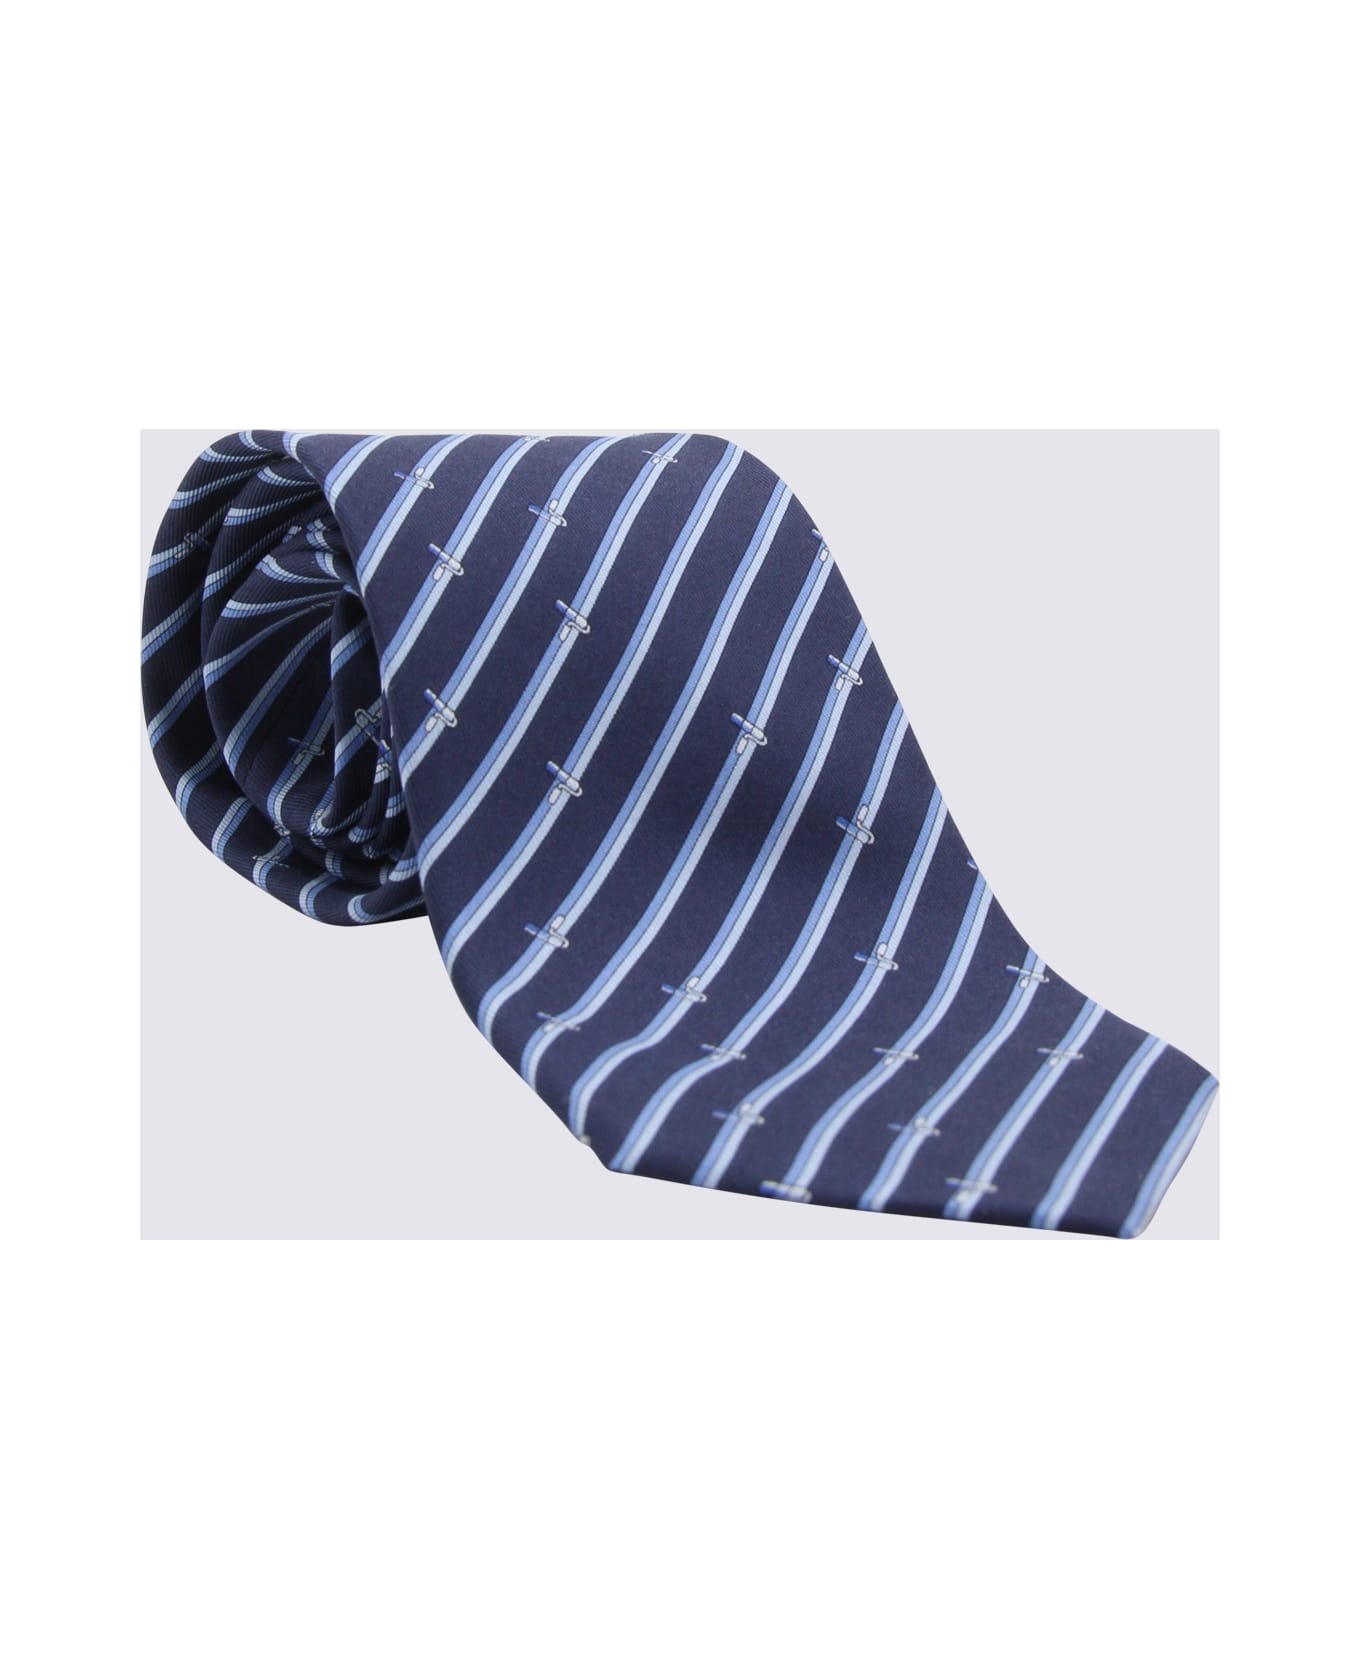 Ferragamo Navy And Light Blue Silk Stripe Tie - NAVY/LIGHT BLUE ネクタイ